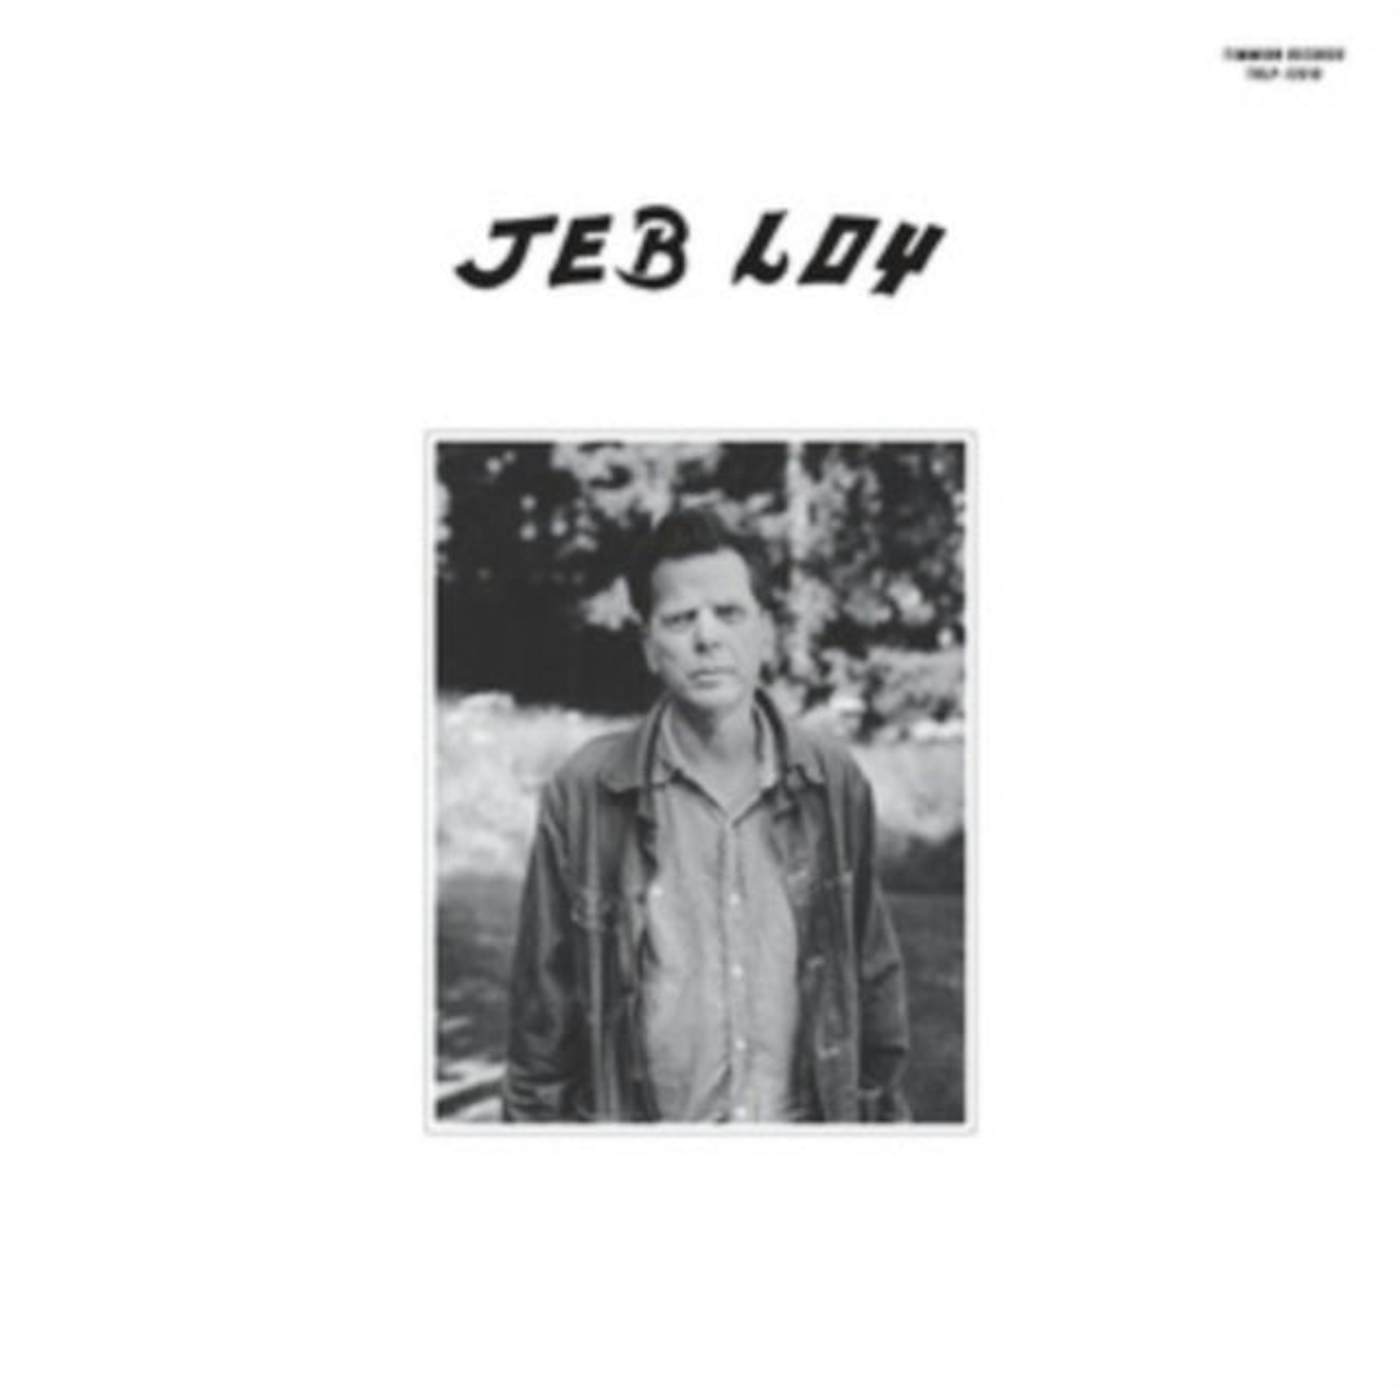 Jeb Loy Nichols LP Vinyl Record - Jeb Loy